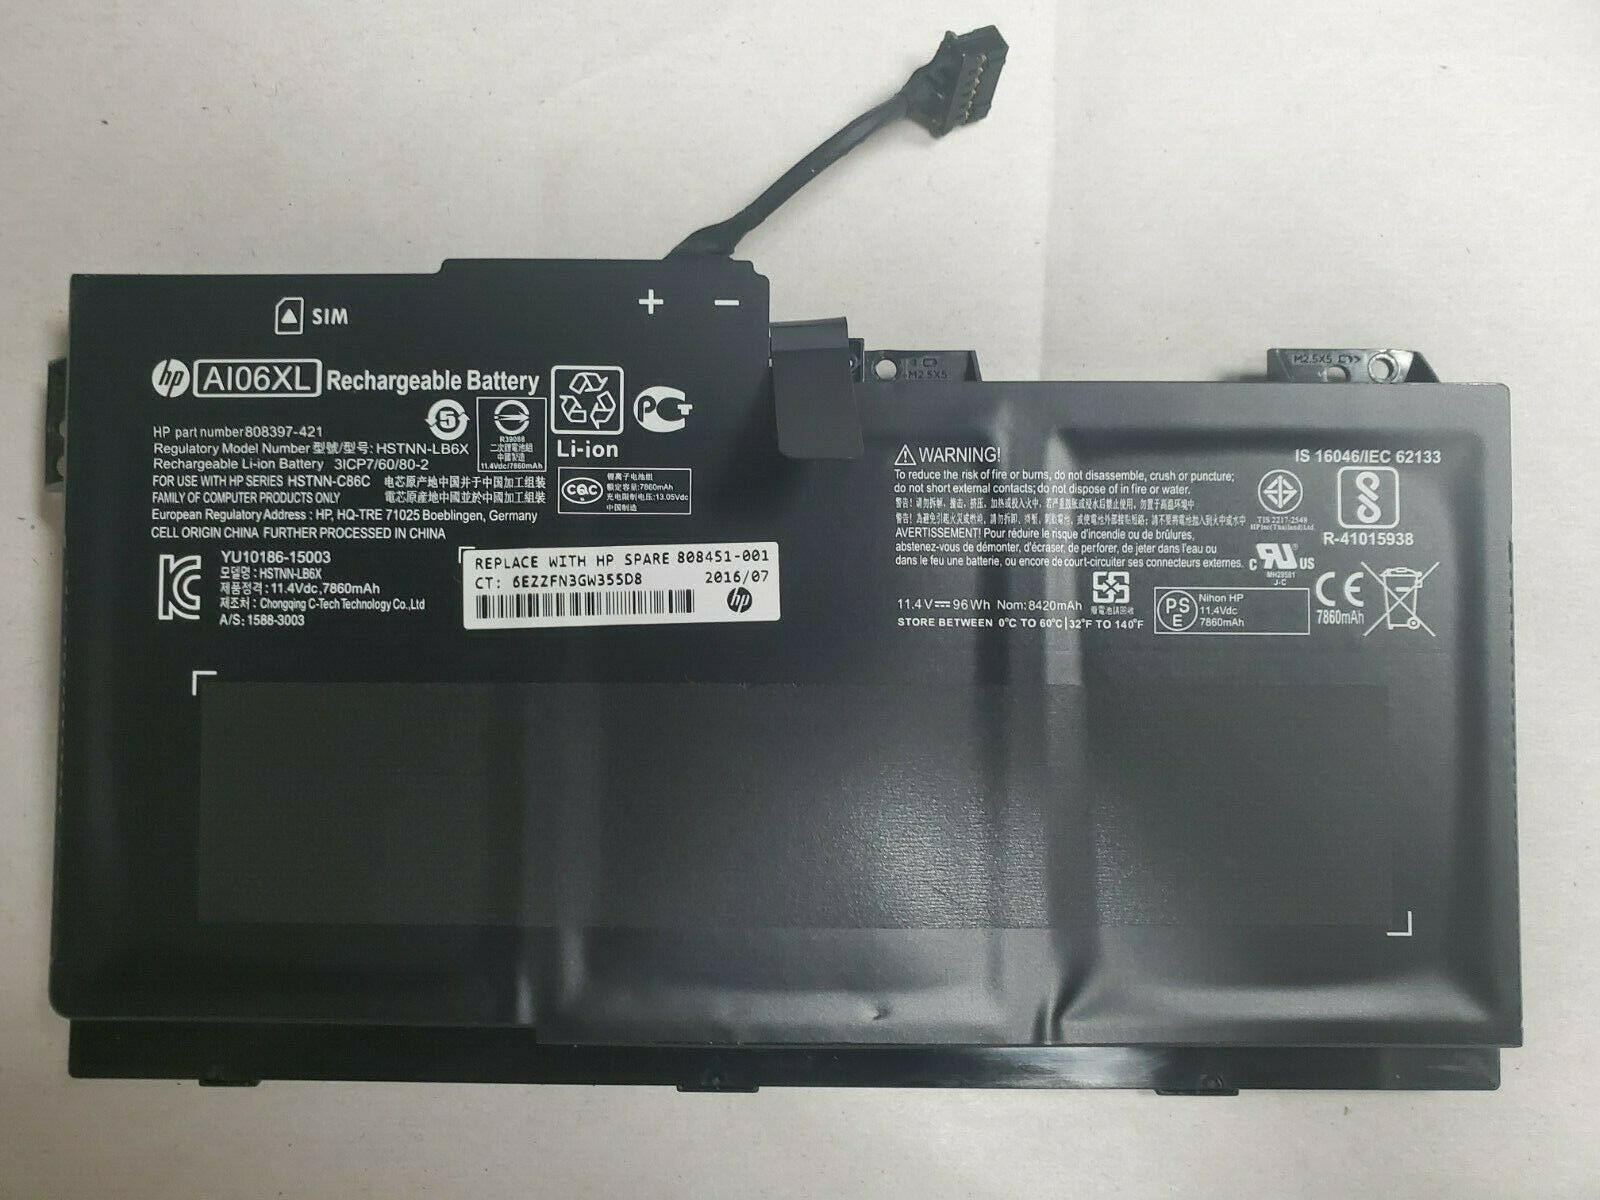 HP ZBook 17 G3 TZV66eA 11.4V 96Wh Battery